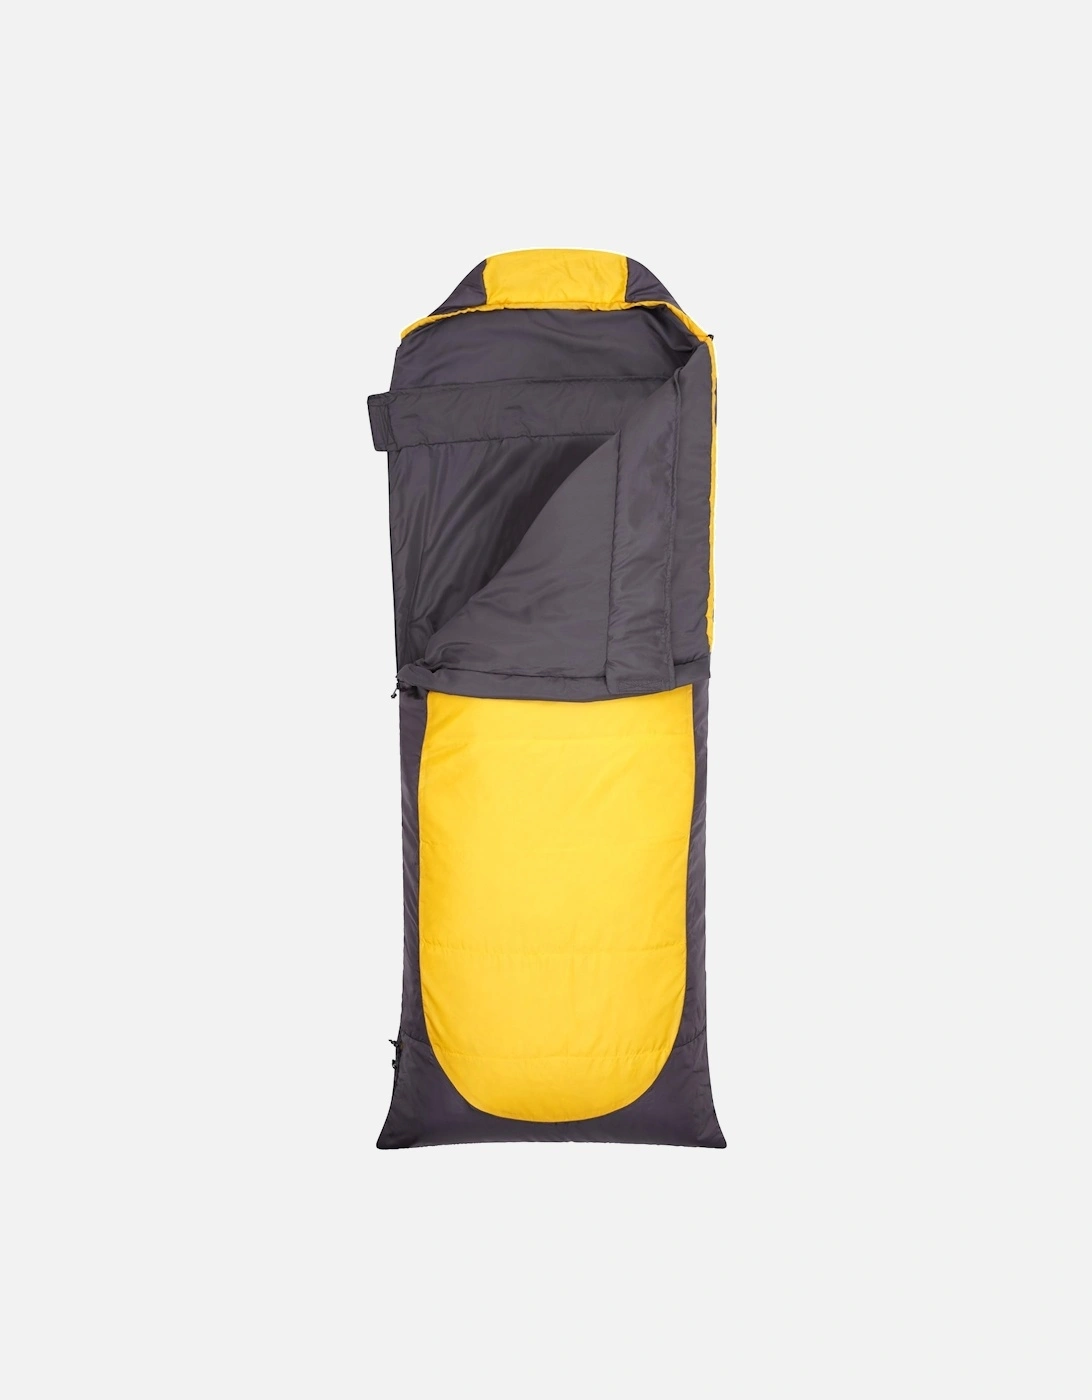 Microlite 500 Mid Season Square Right Zip Sleeping Bag